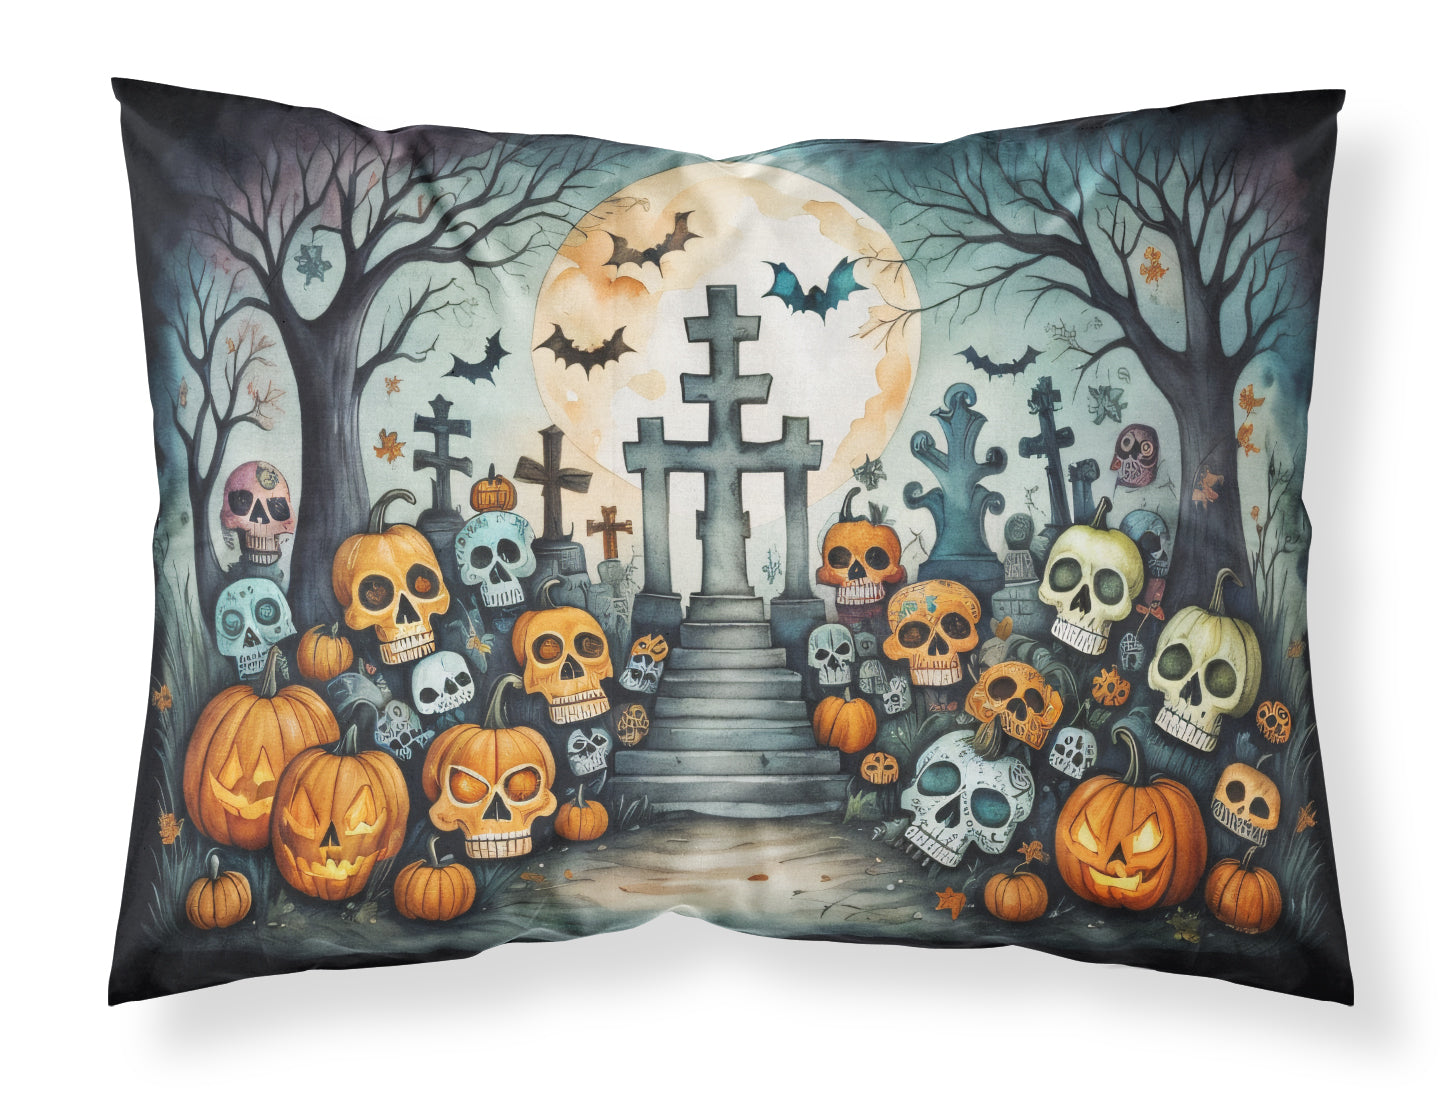 Buy this Calaveras Sugar Skulls Spooky Halloween Fabric Standard Pillowcase